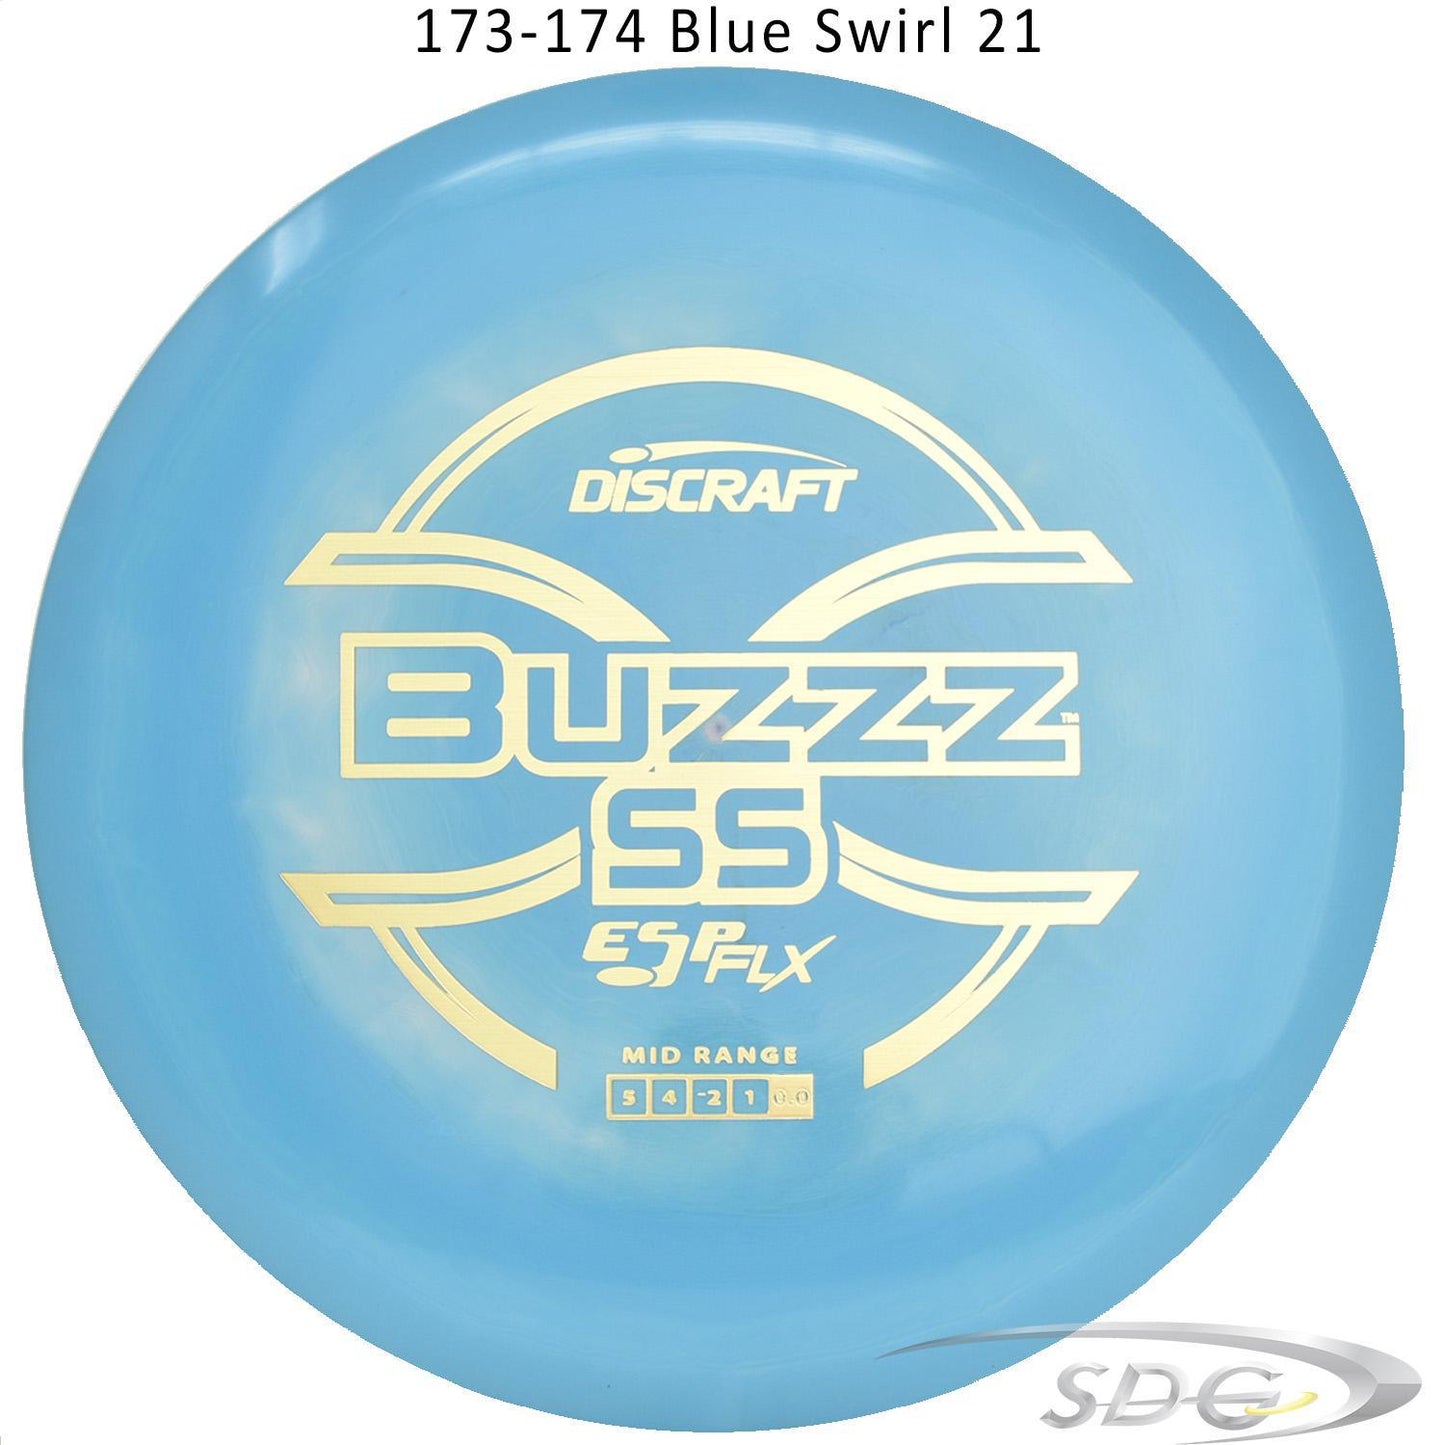 discraft-esp-flx-buzzz-ss-disc-golf-mid-range 173-174 Blue Swirl 21